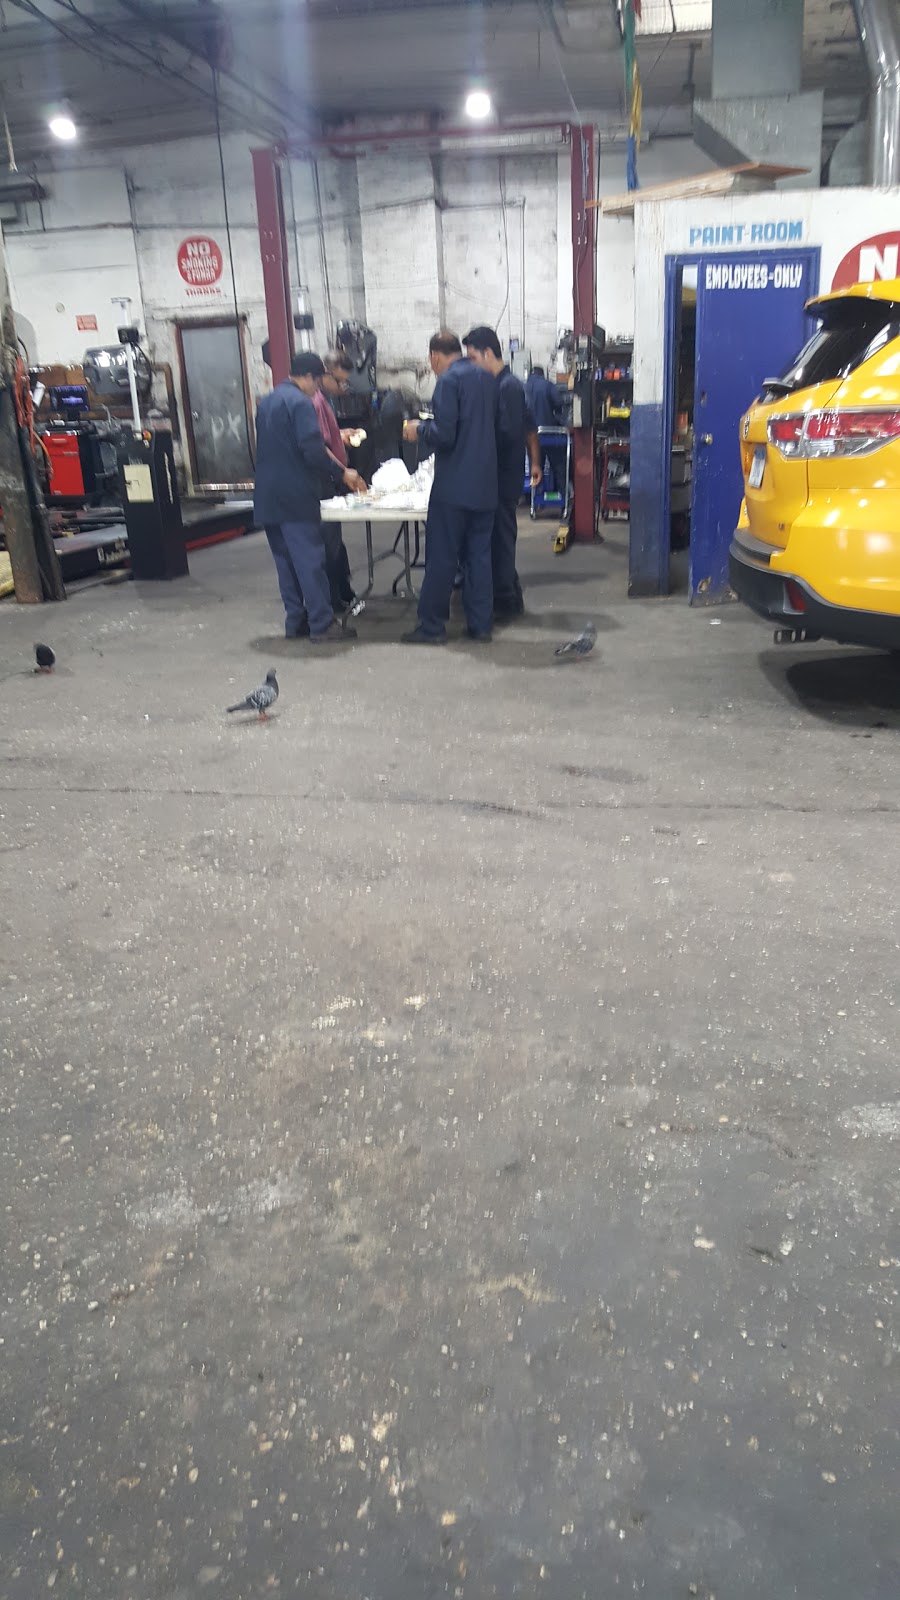 Photo of Punjab Auto Repair in Queens City, New York, United States - 2 Picture of Point of interest, Establishment, Car repair